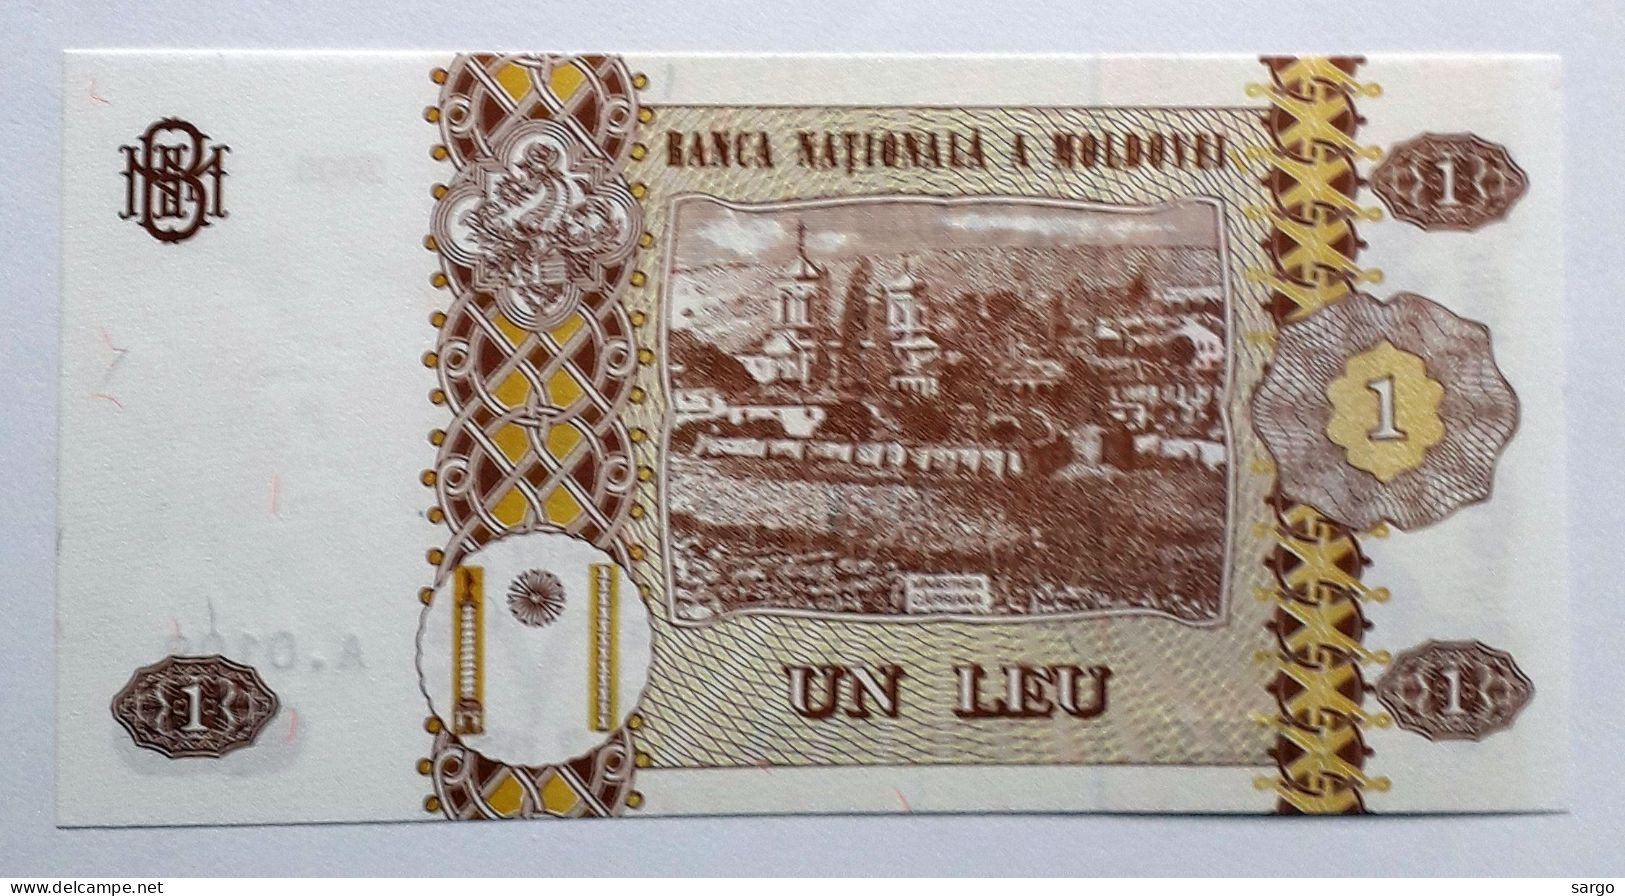 MOLDOVA - 1 LEU - 2015 - UNC - P 21 - BANKNOTES - PAPER MONEY - CARTAMONETA - - Moldavië